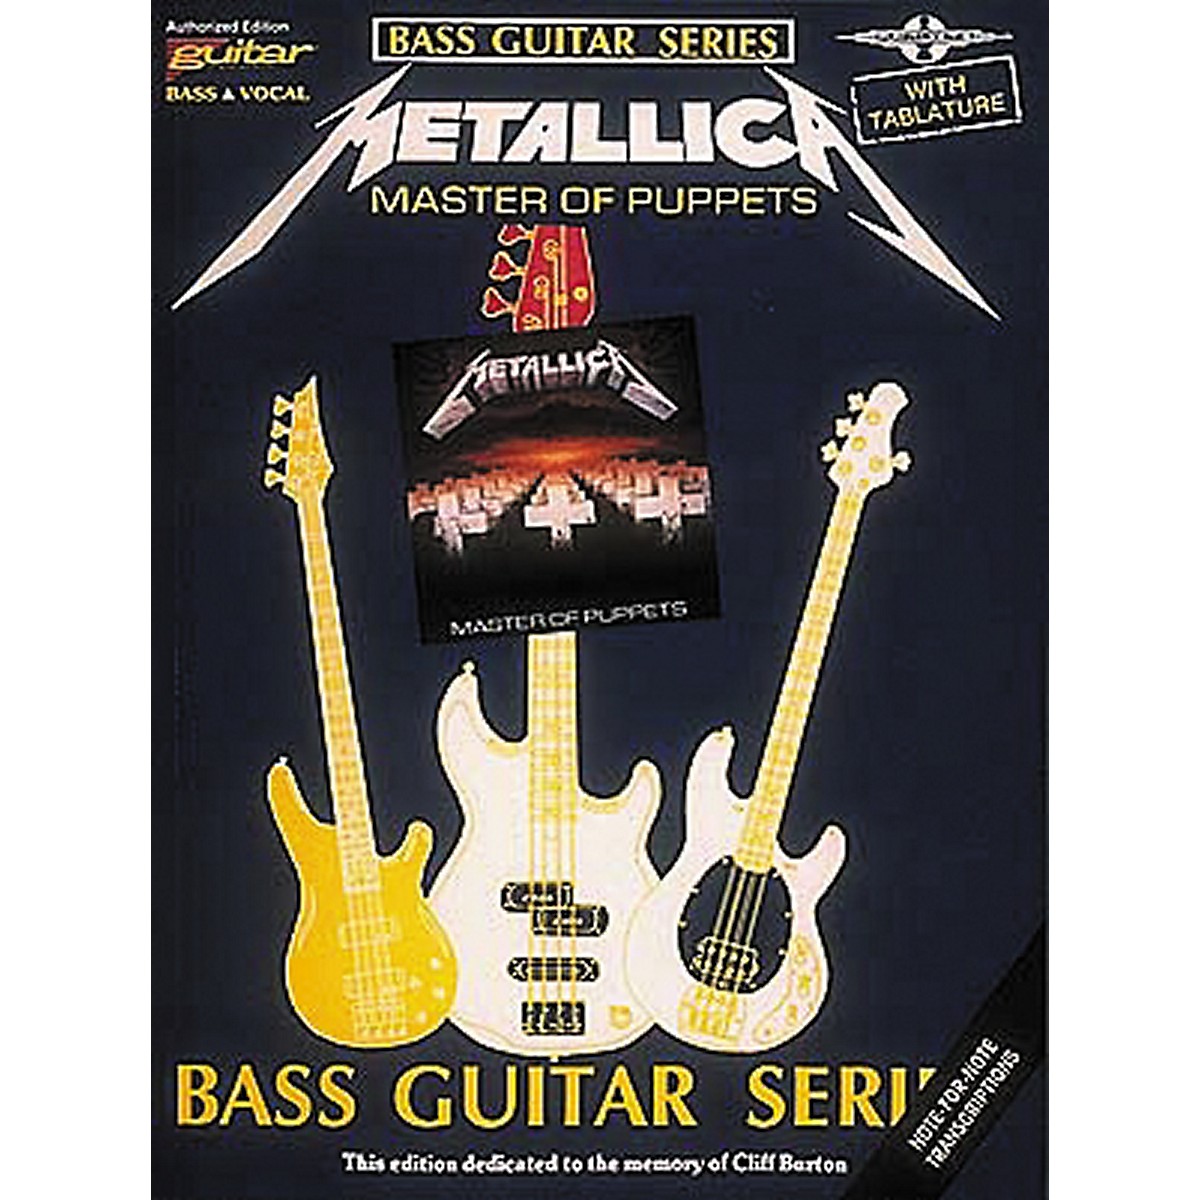 guitar rig 5 metal preset metallica master of puppets guitar